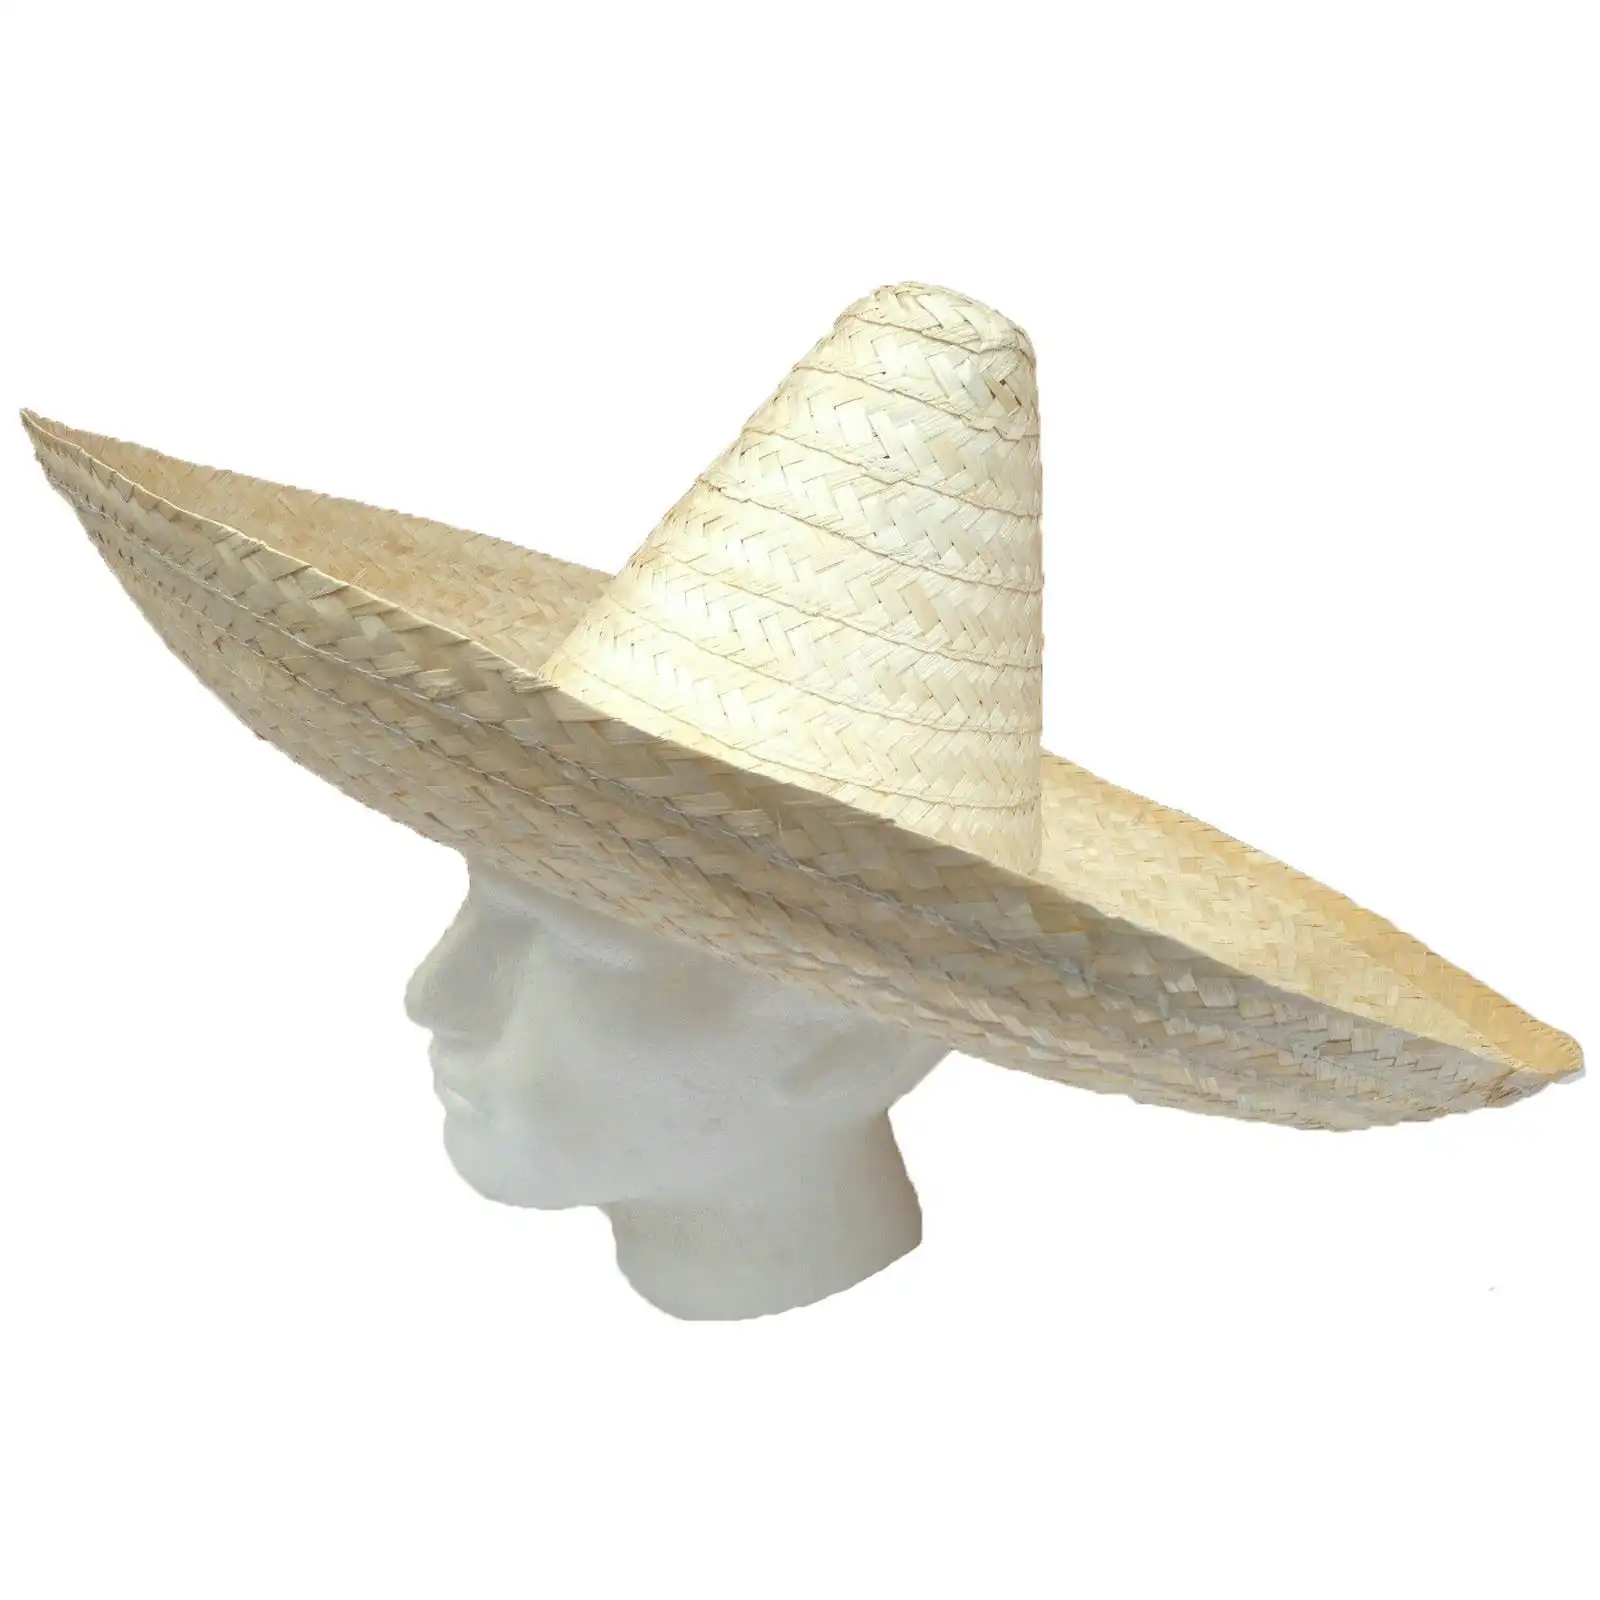 10x Mexican SOMBRERO Beige Fancy Dress Straw Party Costume Hat Cap Spanish BULK